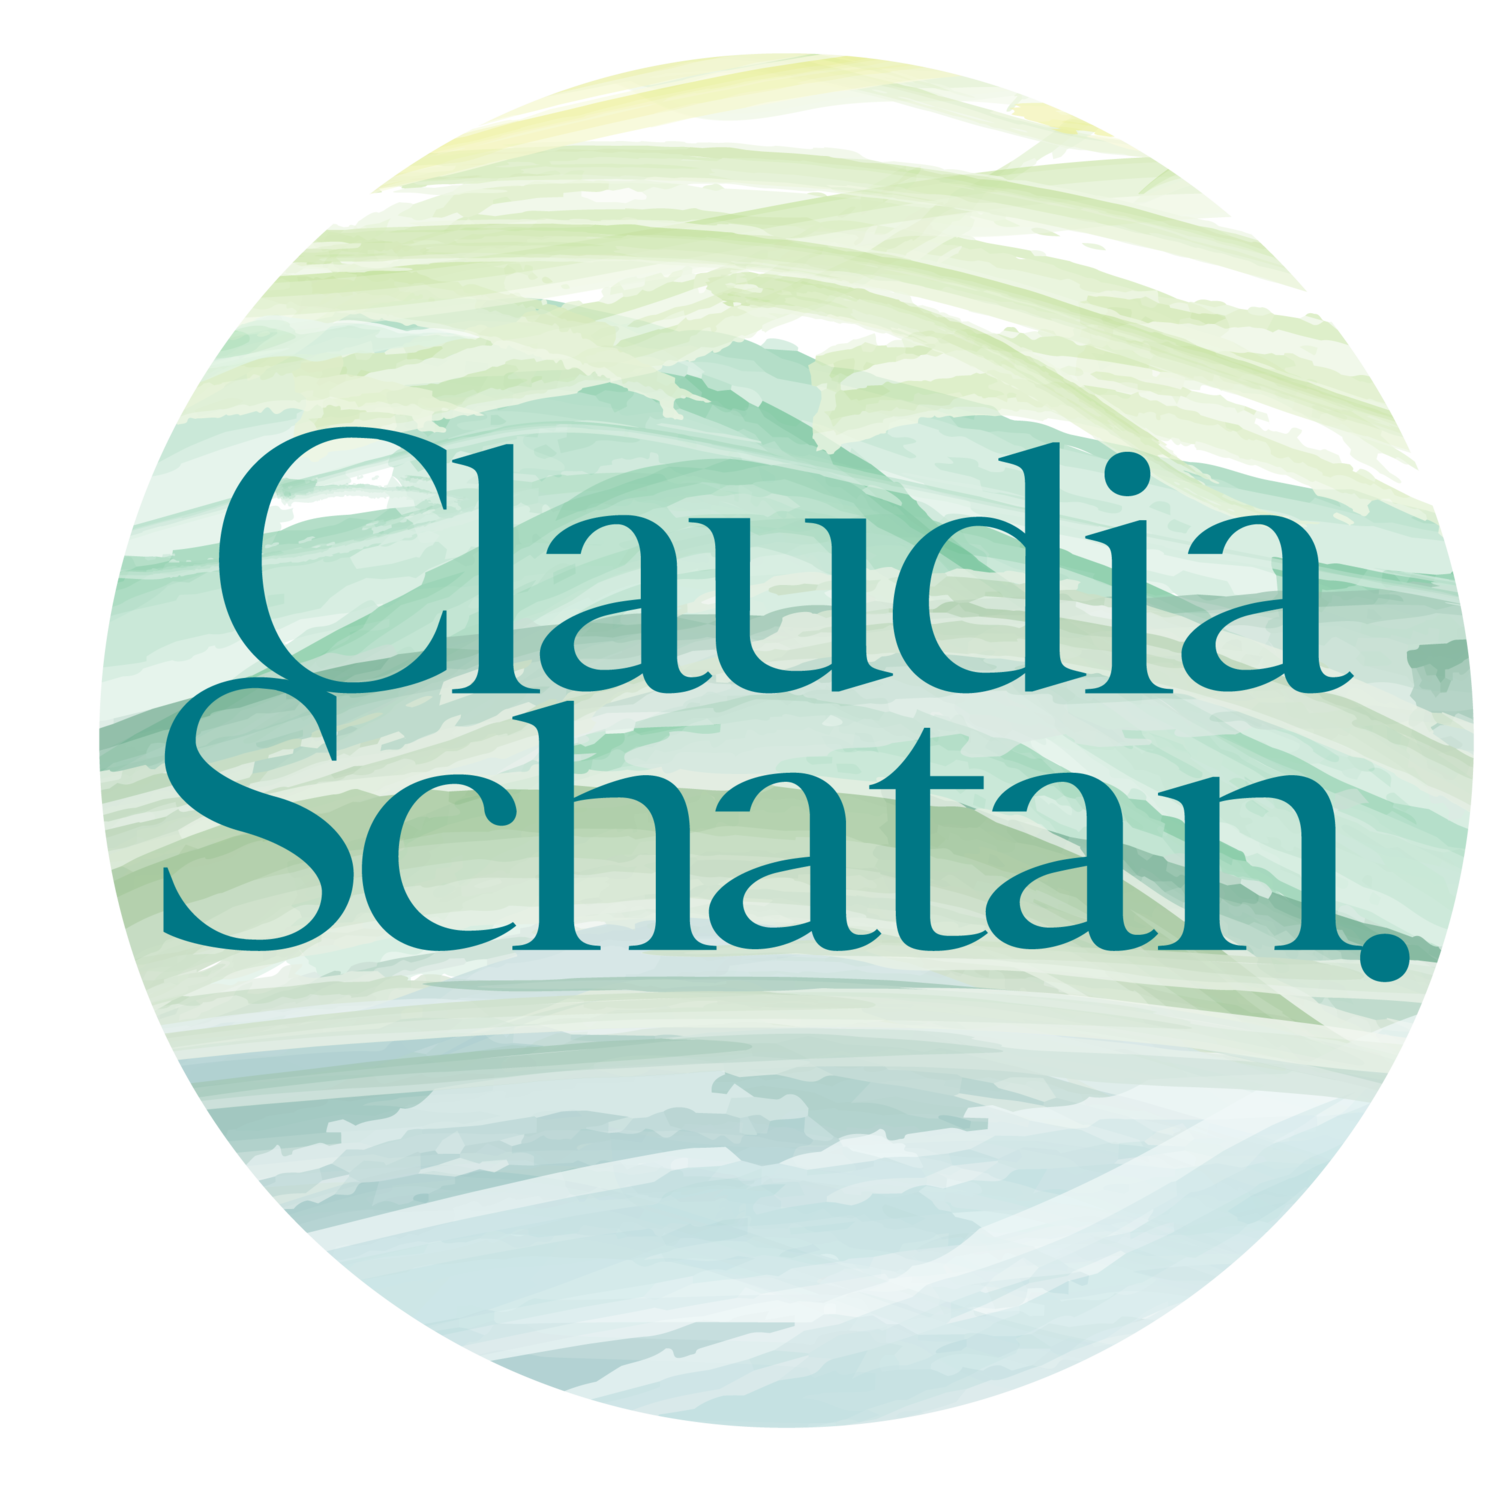 Claudia Schatan